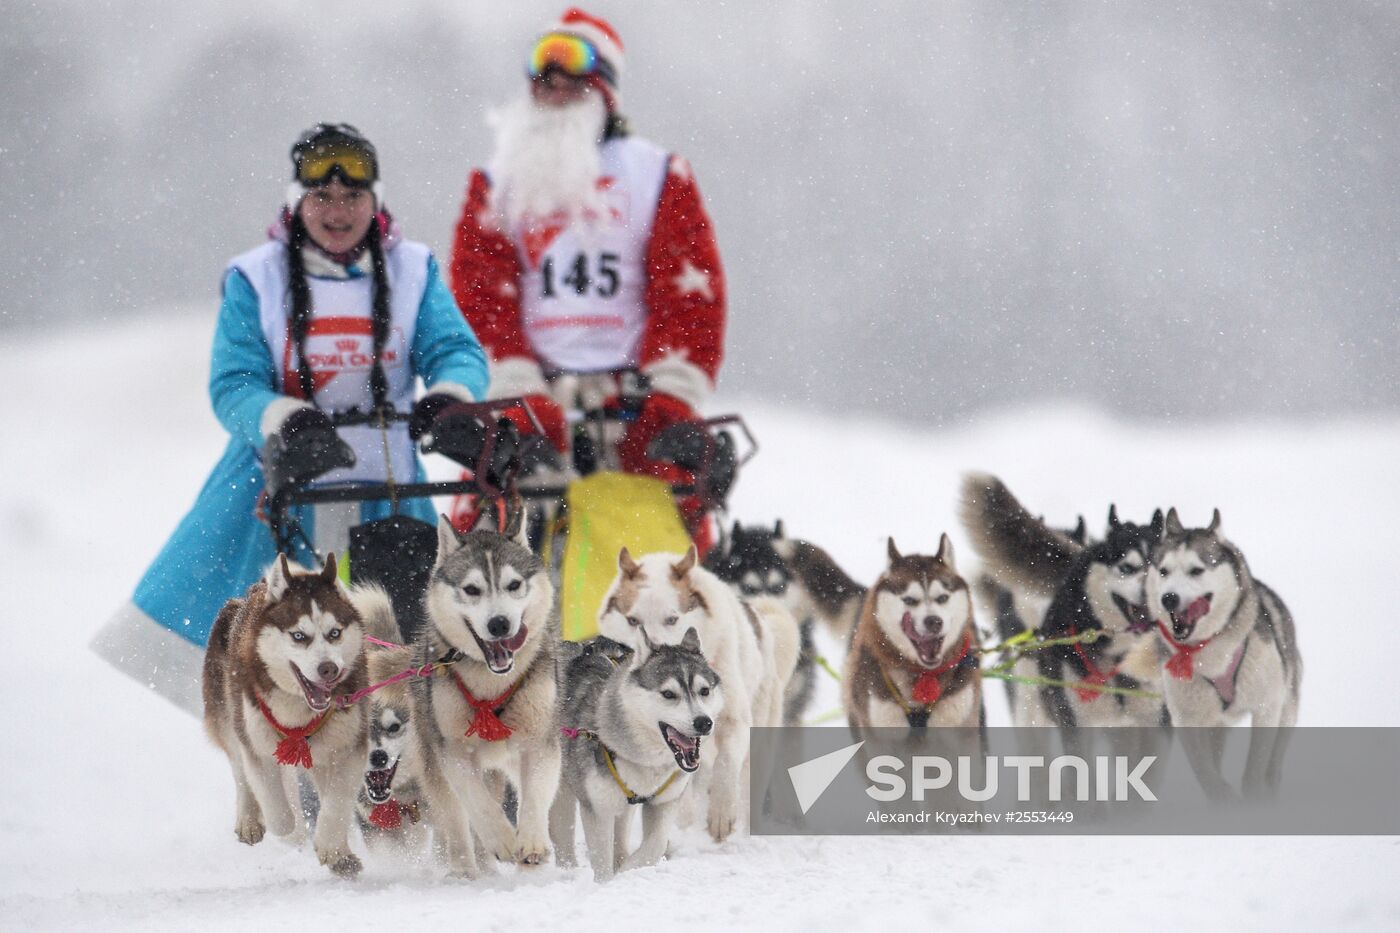 "Christmas race - 2015" sled dog race